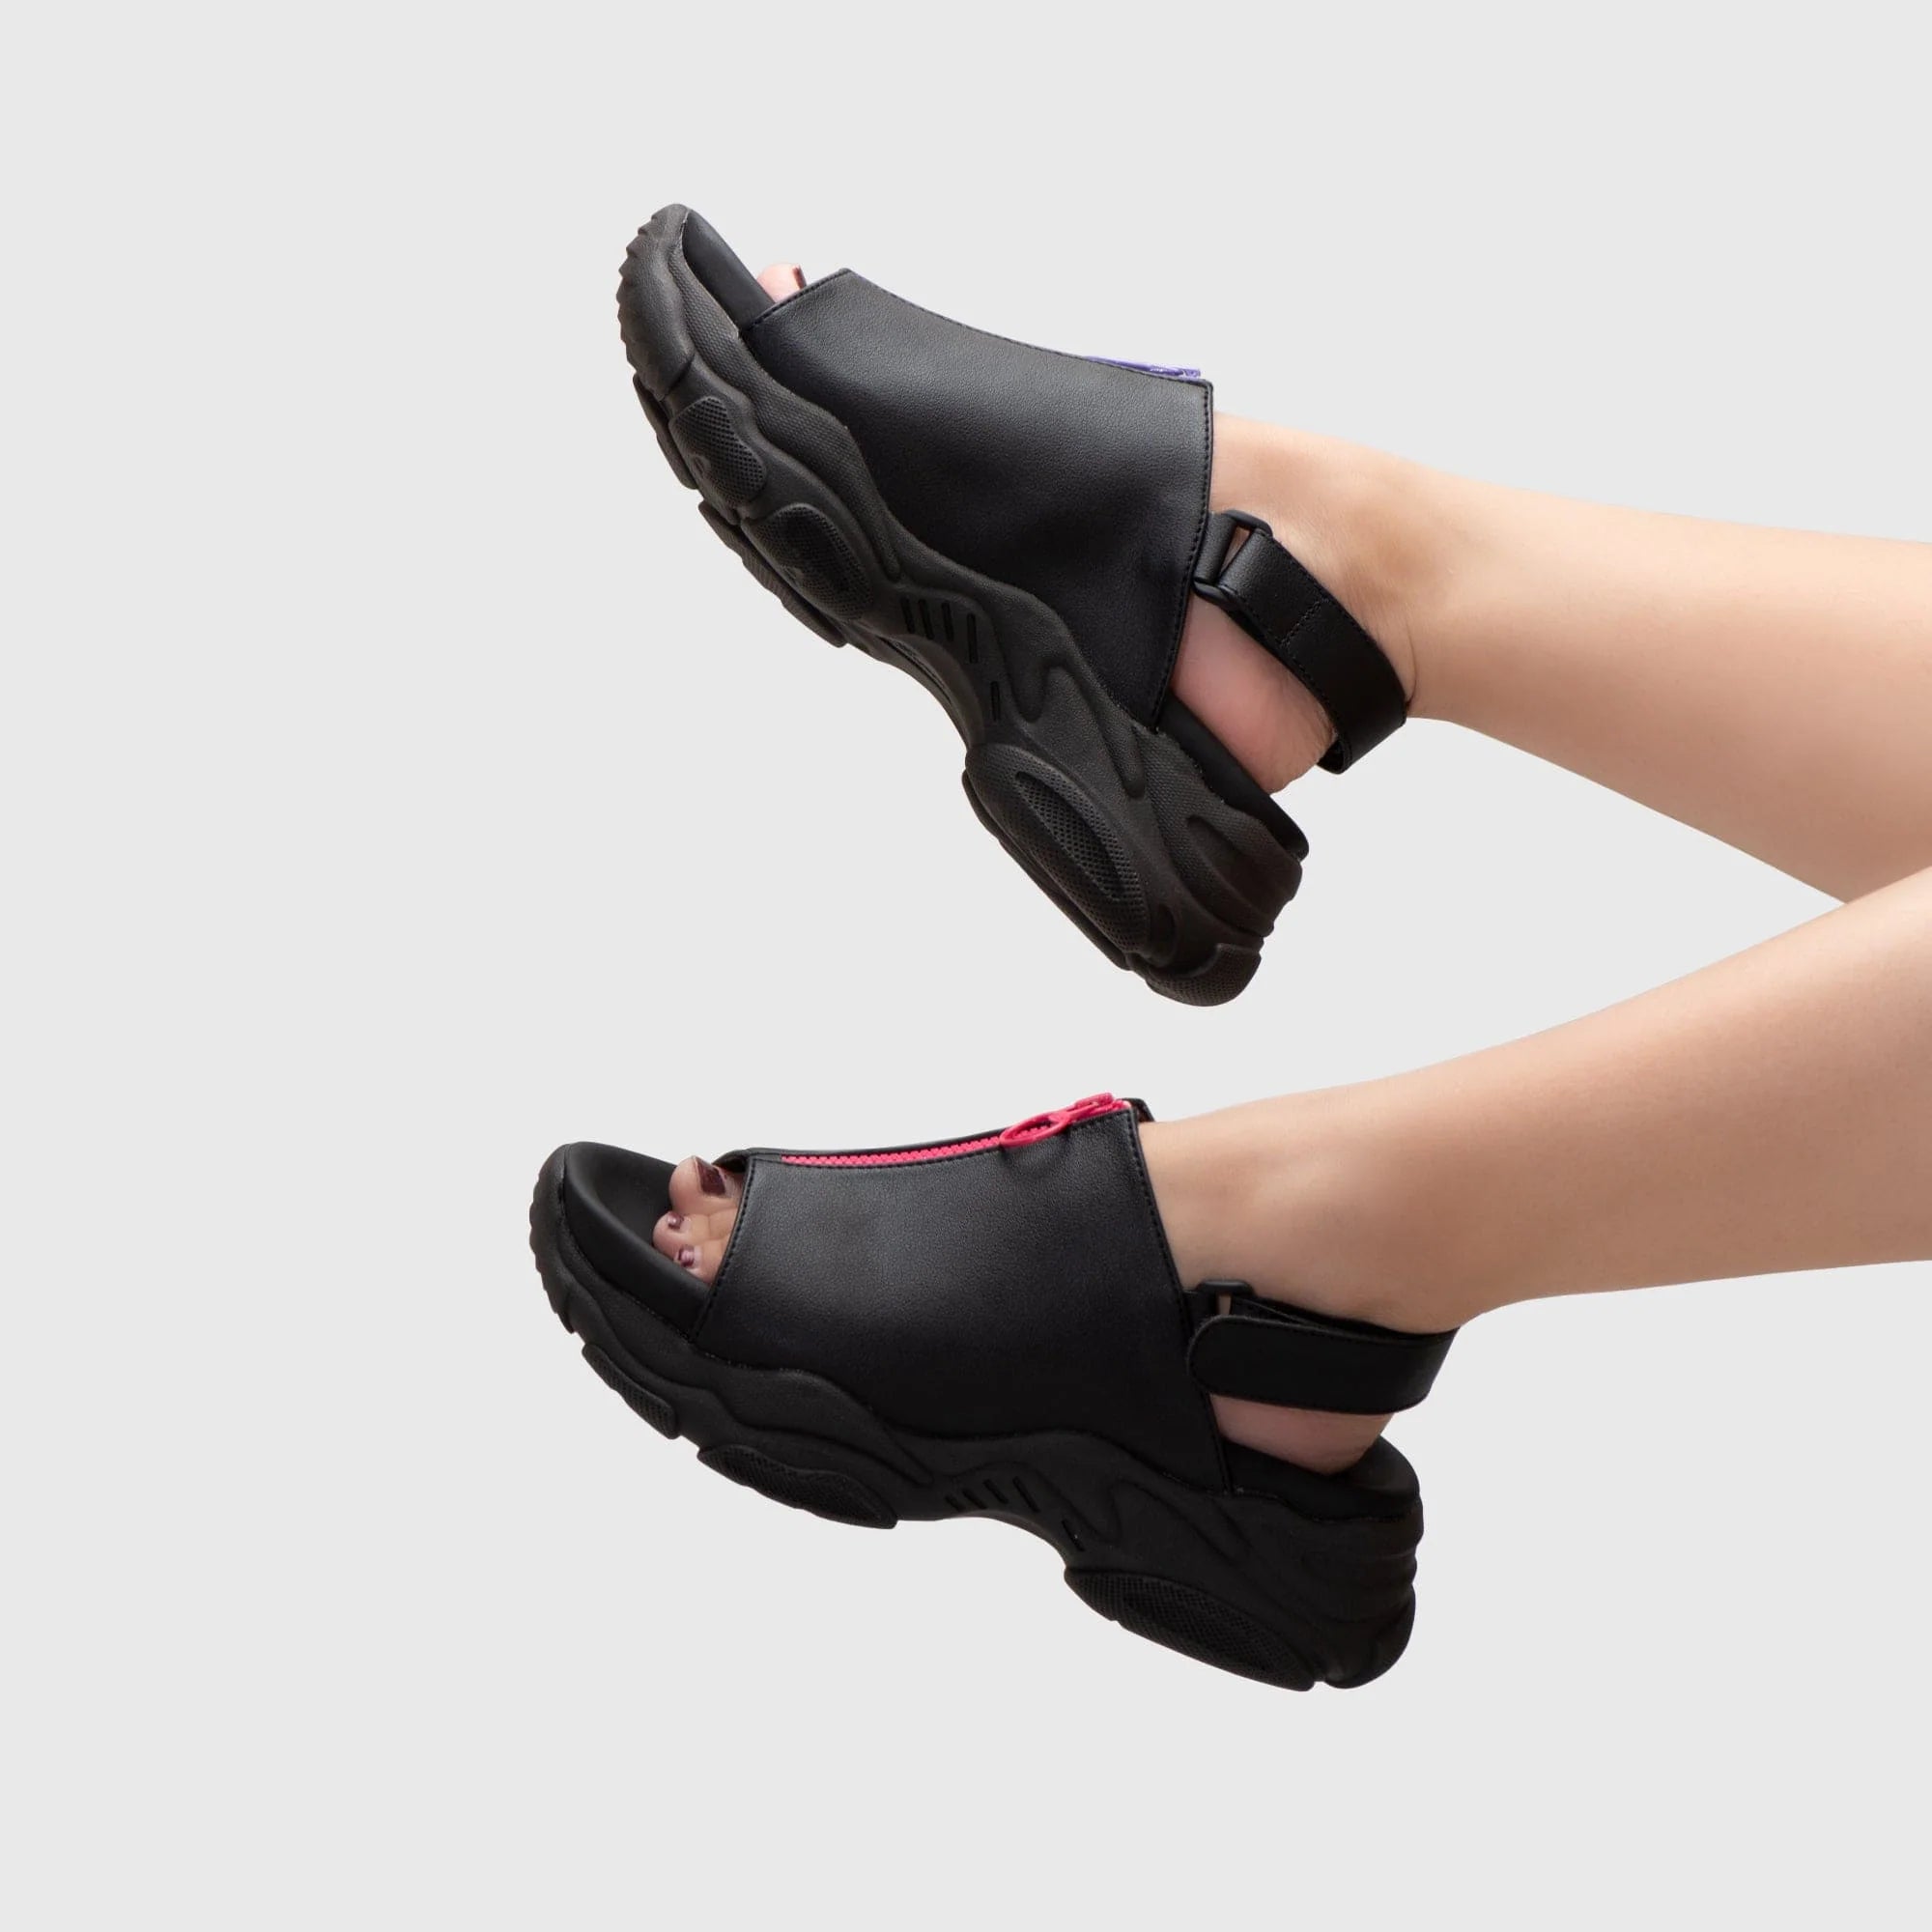 Adorable Project Nataline Sandals Black On Foot